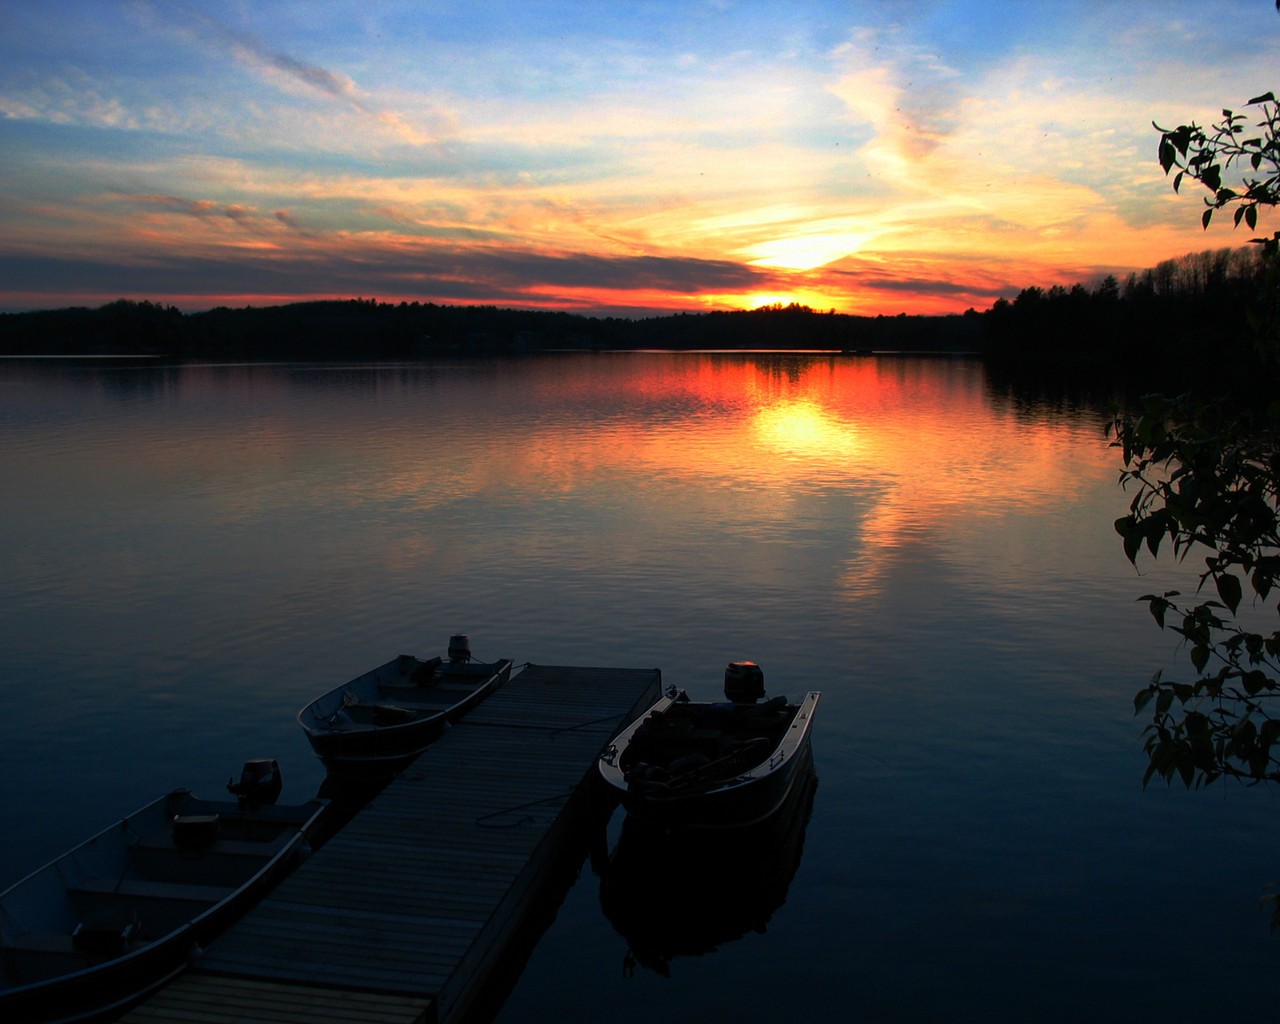 General 1280x1024 sunlight landscape lake sunset boat vehicle outdoors dark water reflection